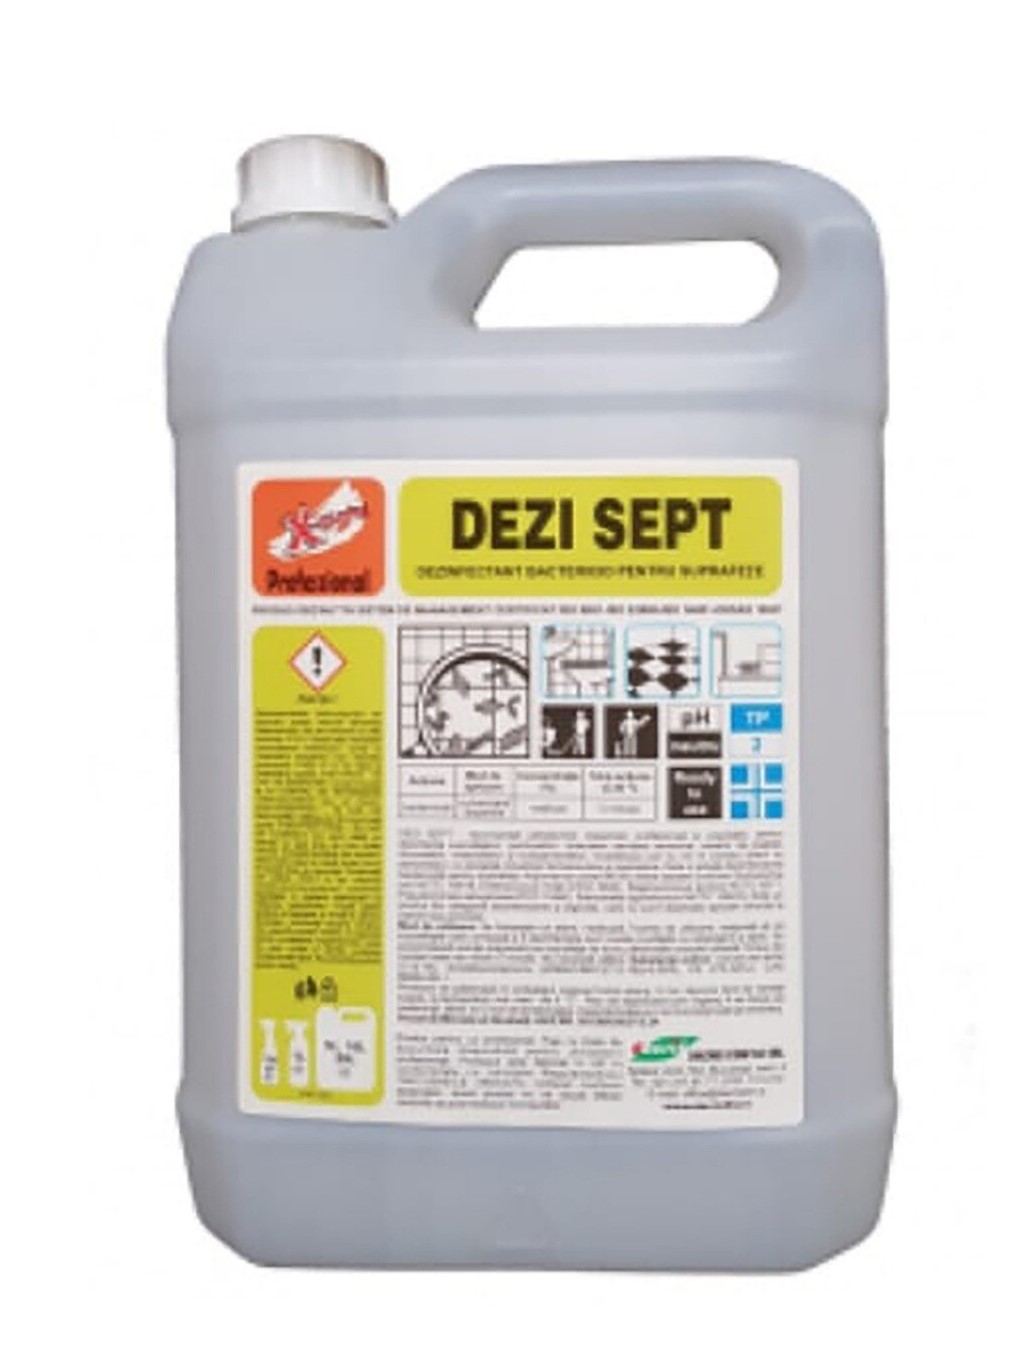 DEZI SEPT X-CLEAN Dezinfectant pentru suprafete 5L-Avizat de Ministerul Sanatatii AQAS